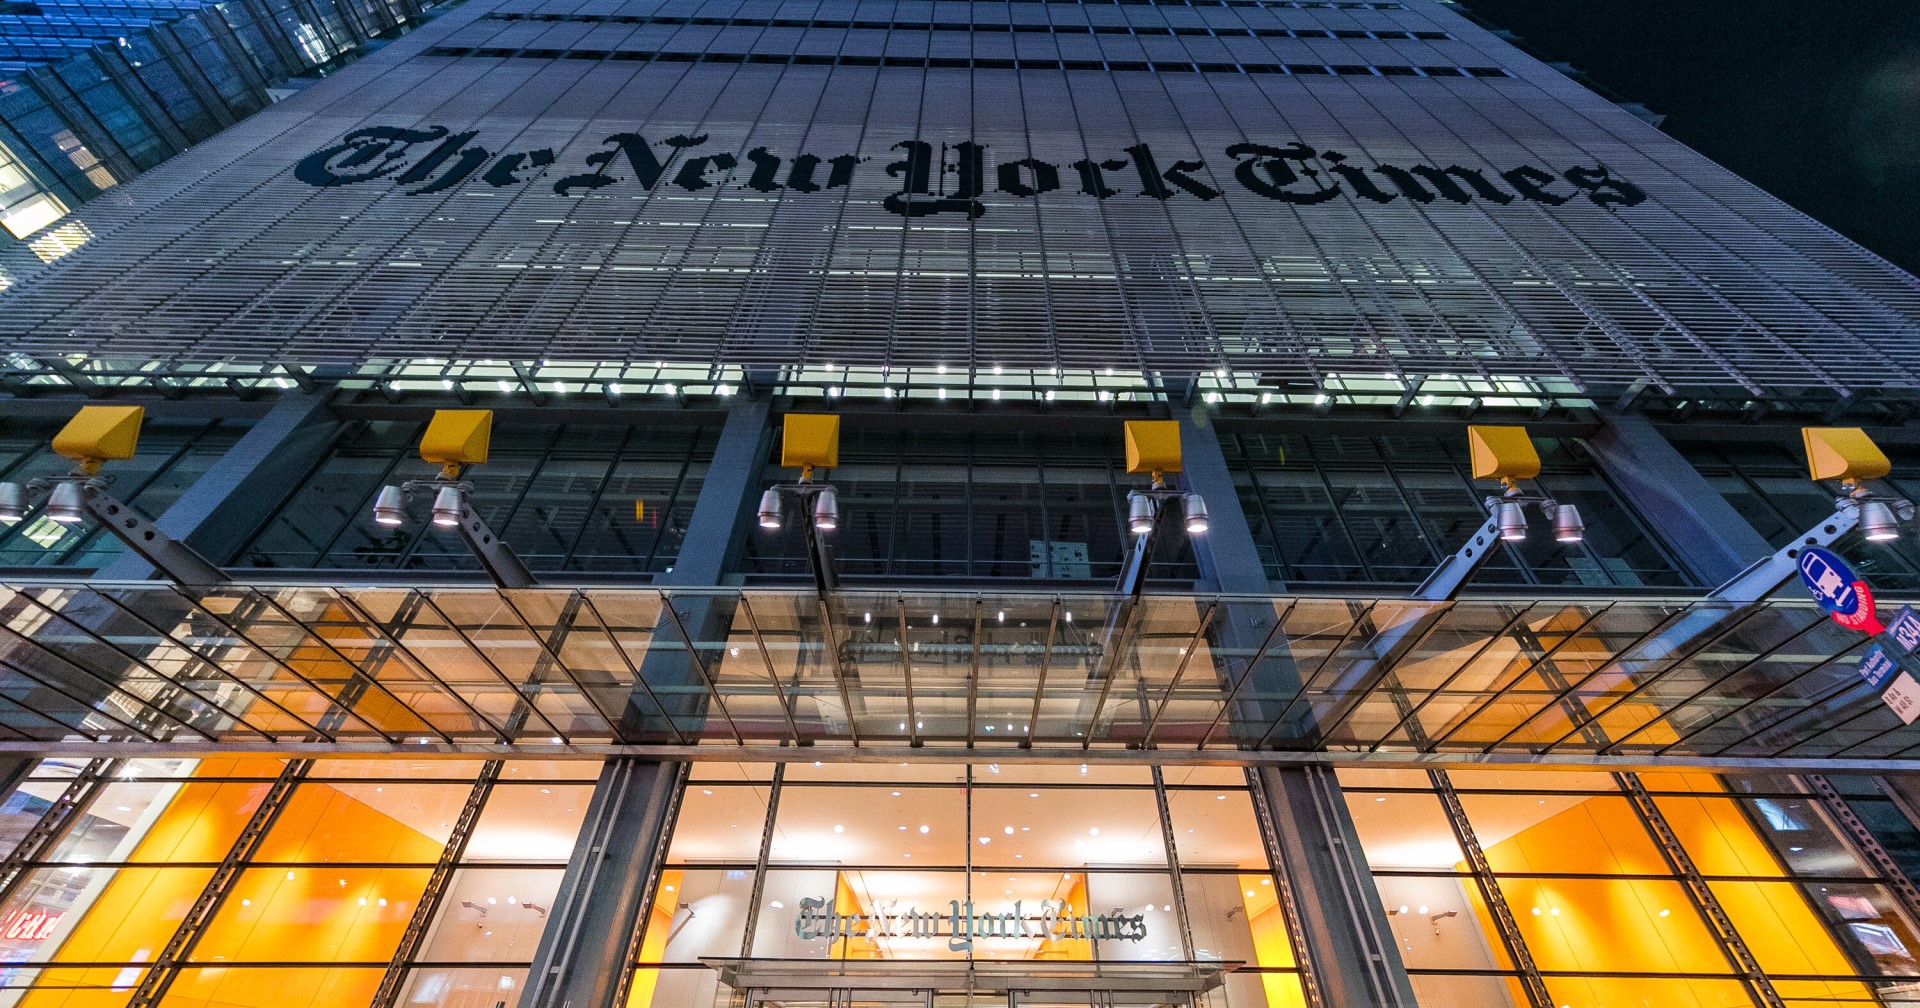 New York Times ไม่สน Twitter Blue และจะไม่จ่ายเงินนักข่าวที่สมัครด้วย